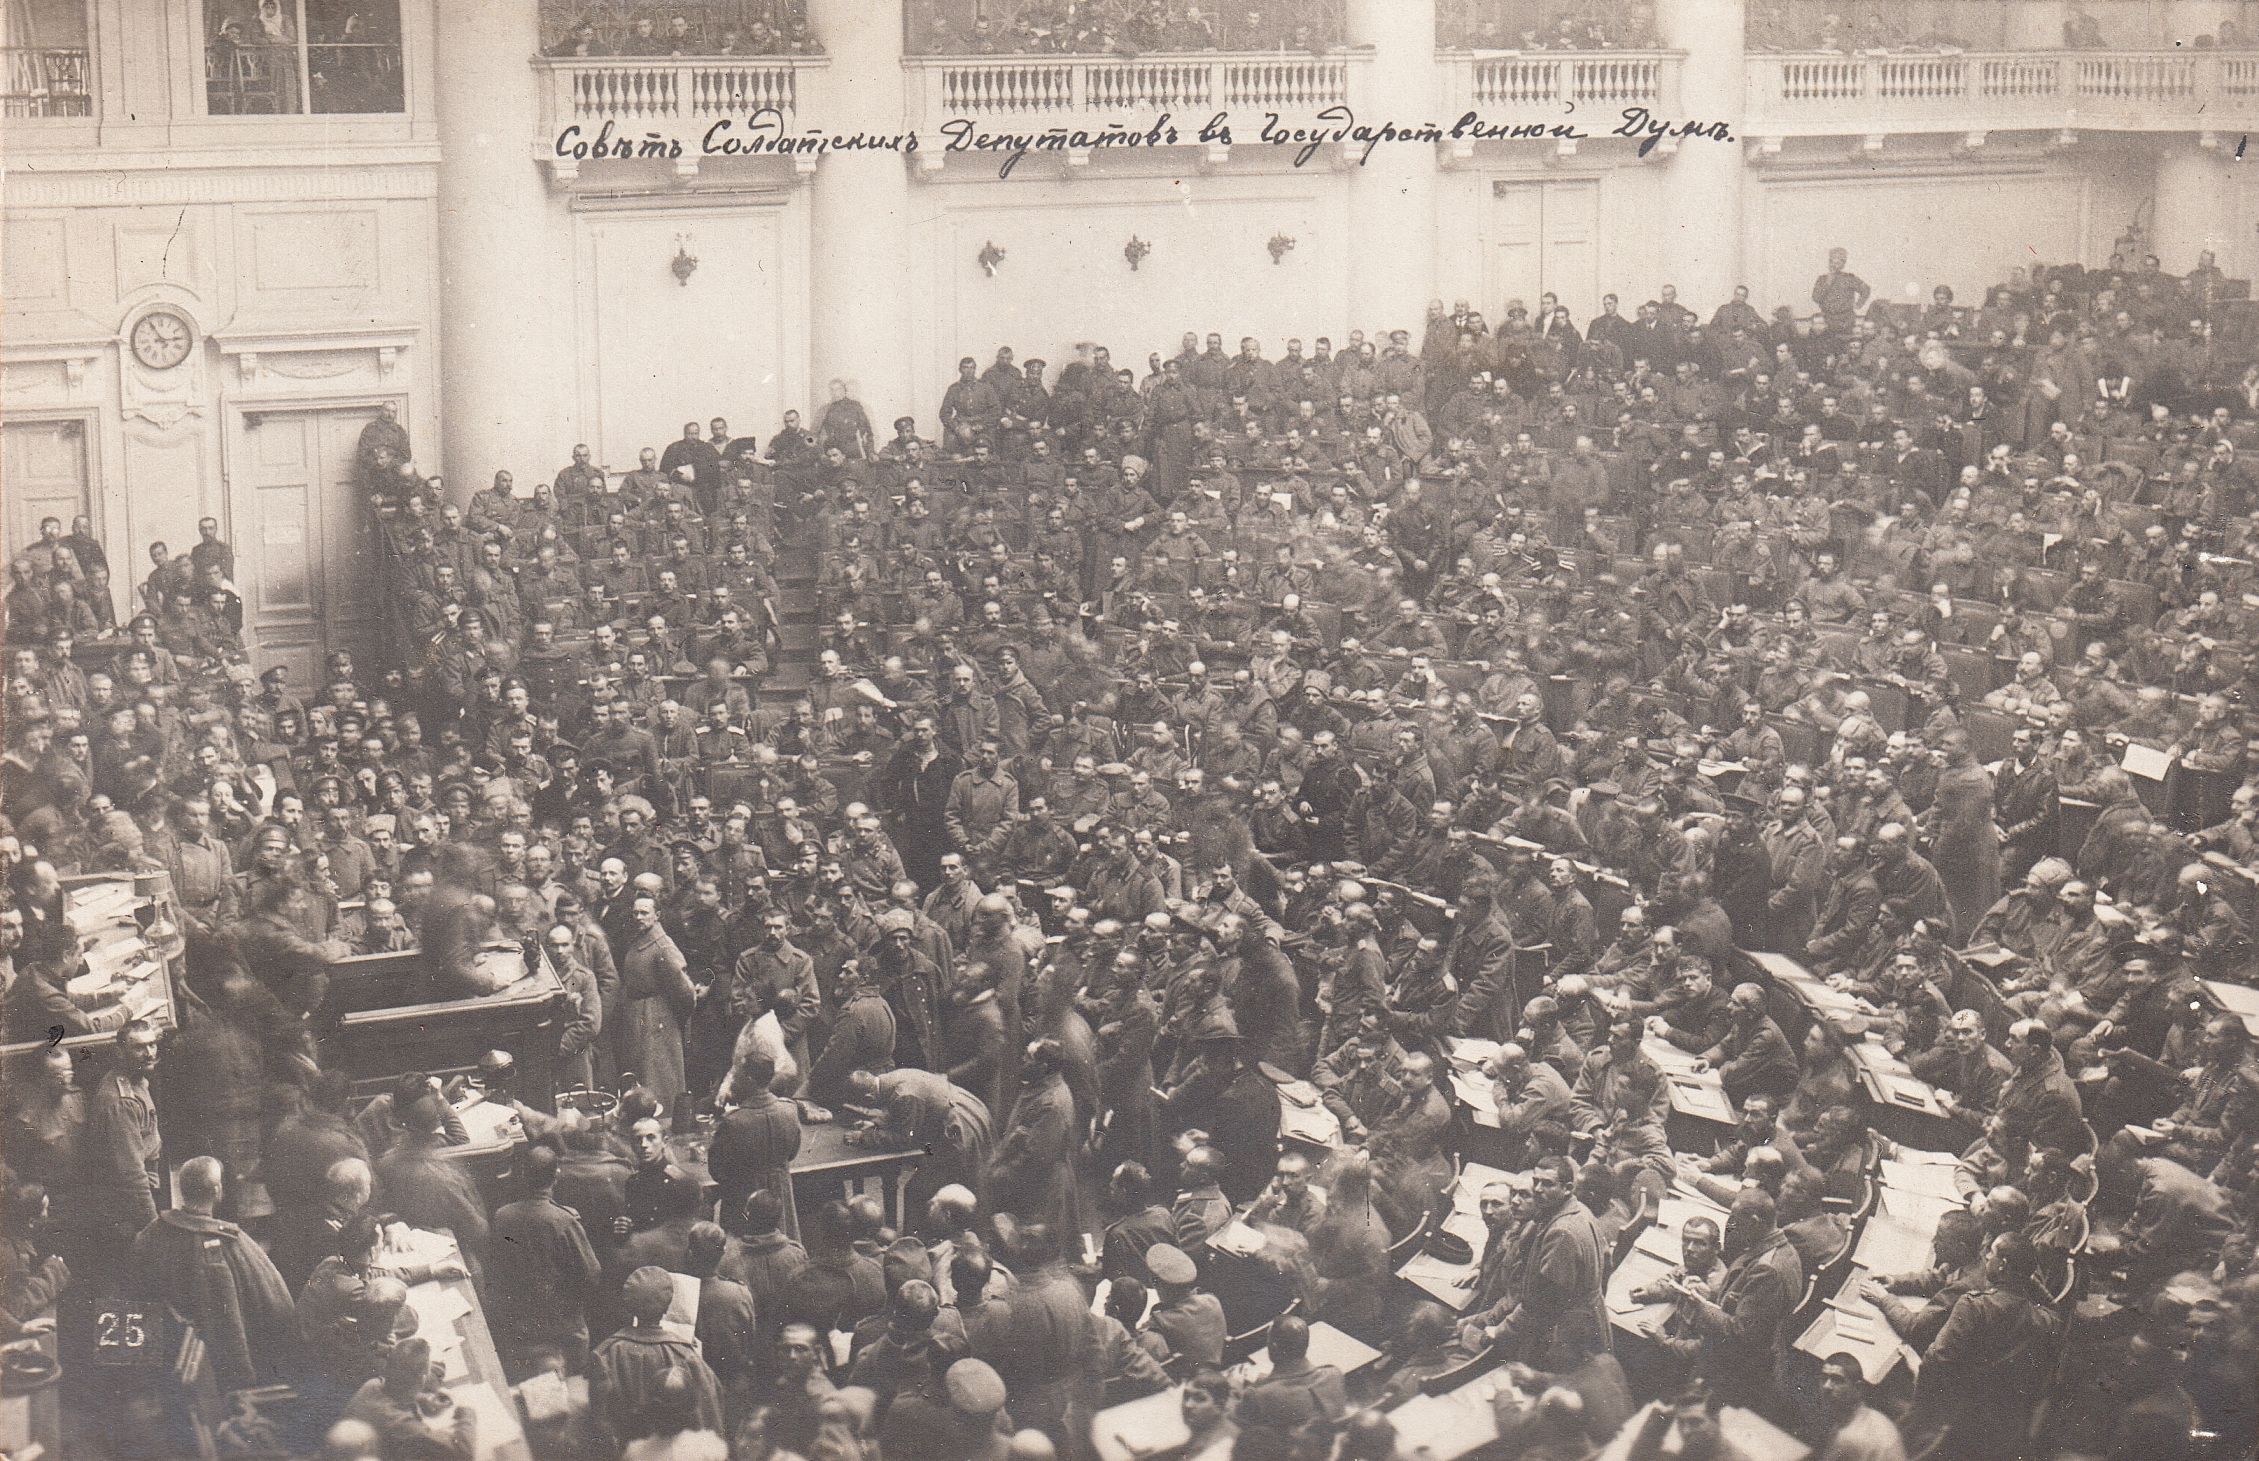 Petrograd Soviet Assembly in 1917 Image fair use